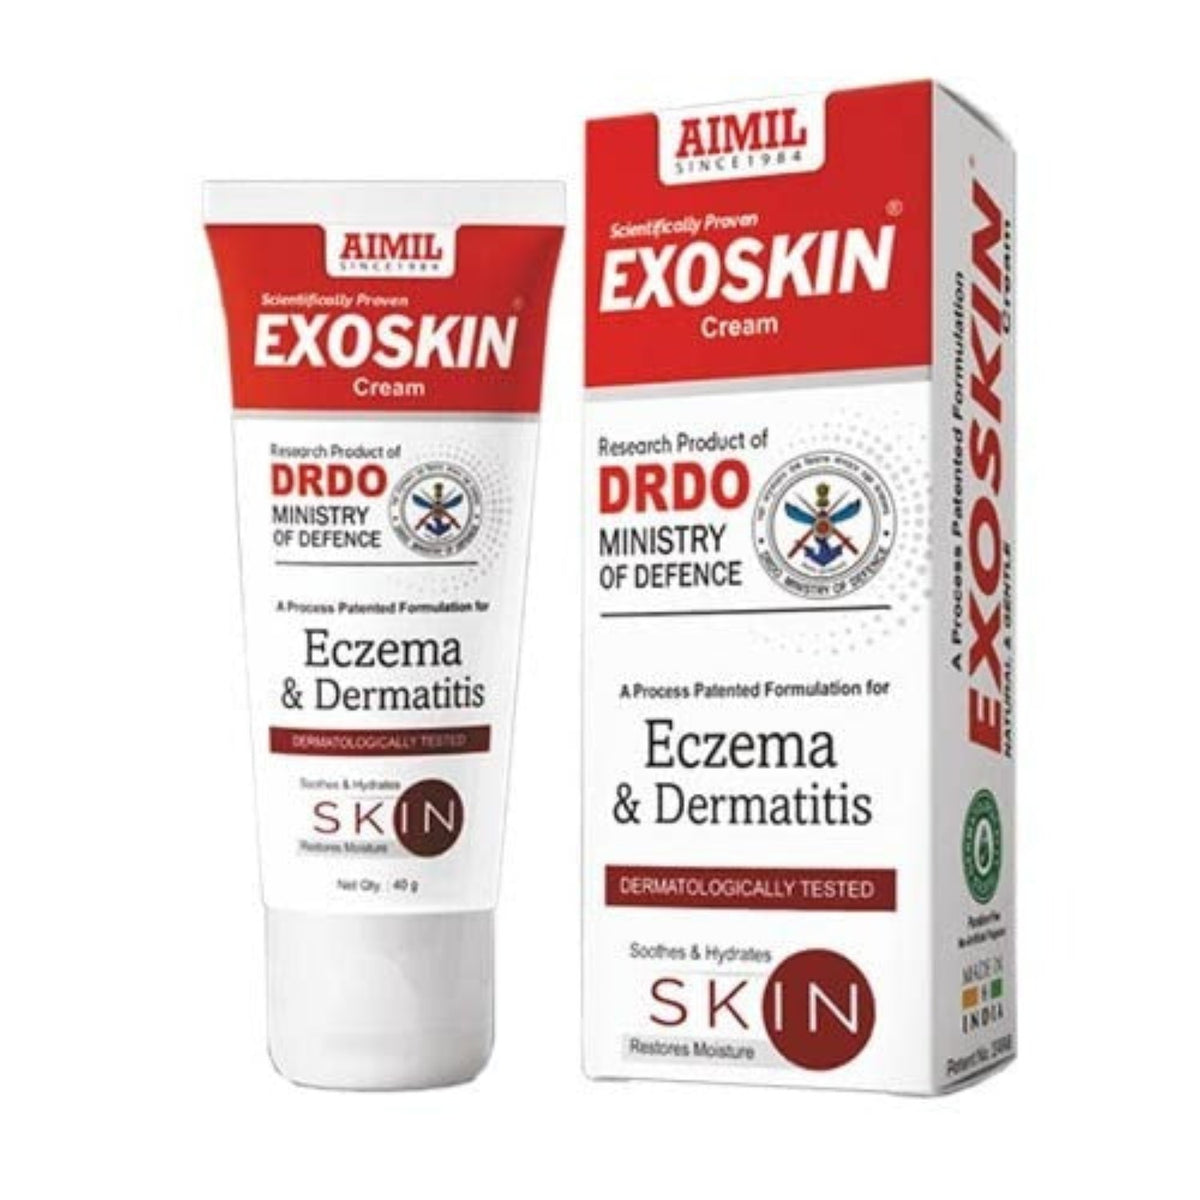 Aimil Ayurvedic Exoskin Reduced Itching & Redness Hydrates Skin Calms Blister Cream 40 Gm